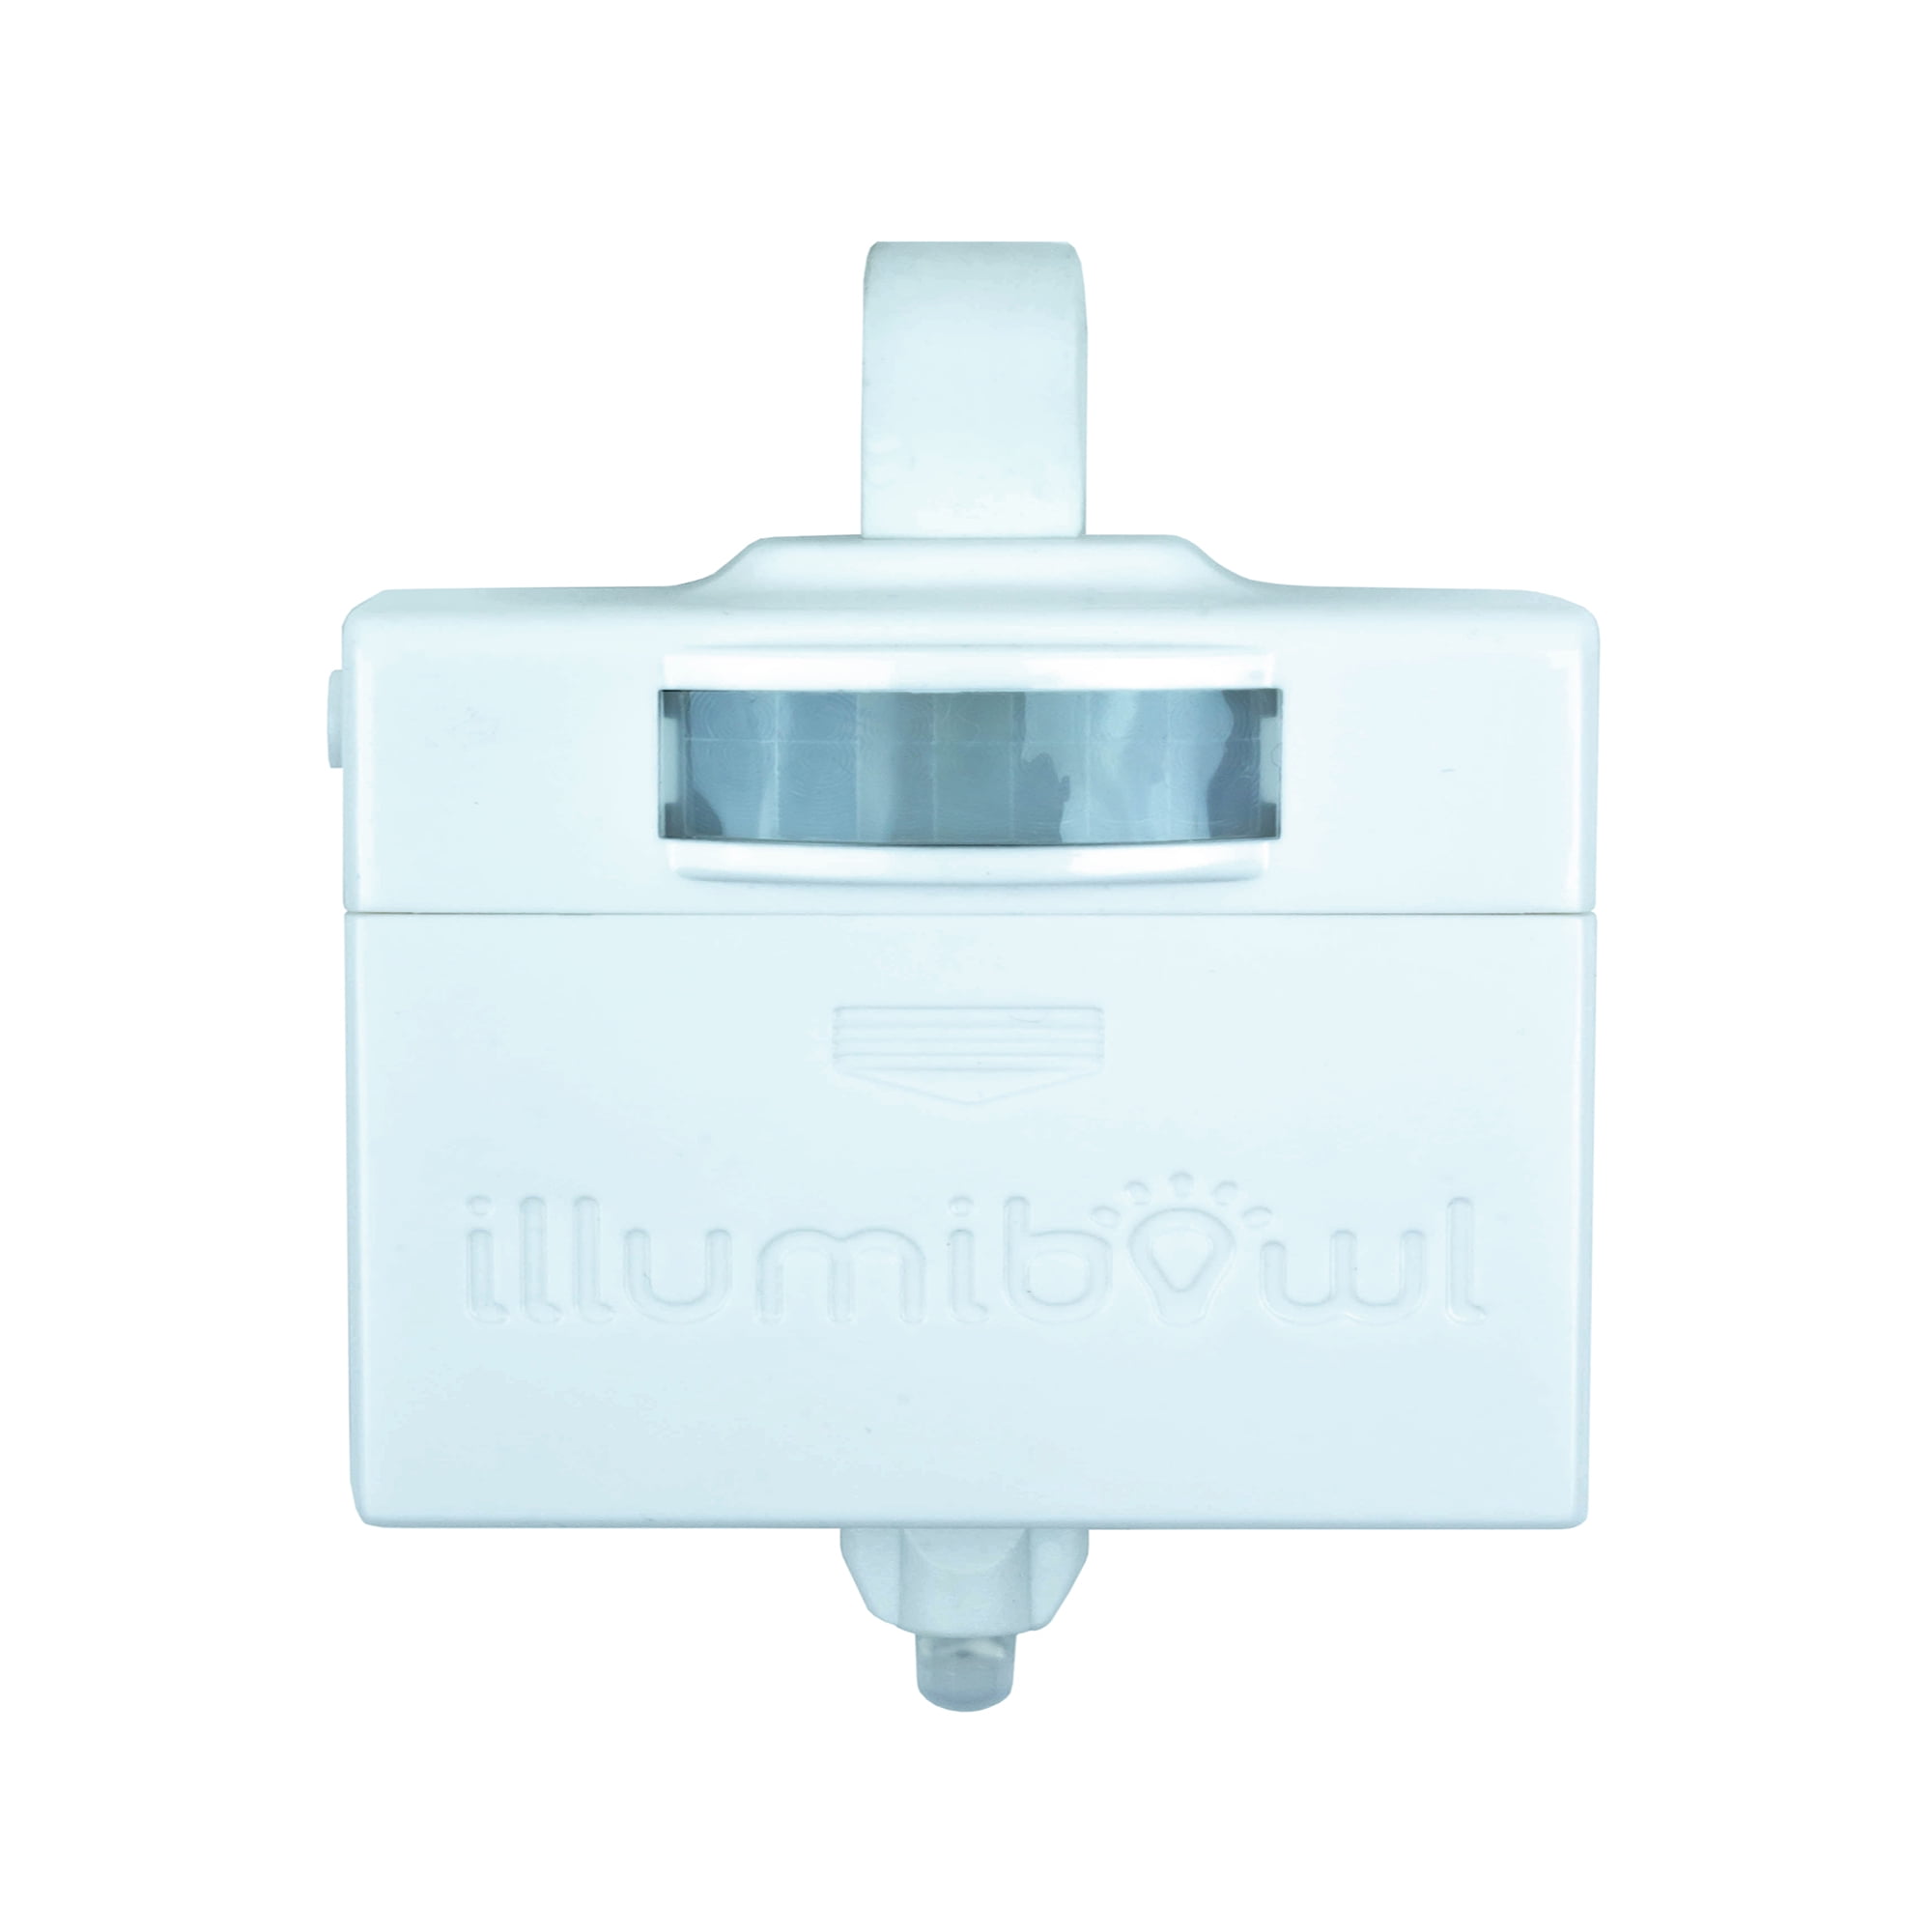 IllumiBowl 2.0: Toilet Night Light (Shark Tank Upgrade) by Matt